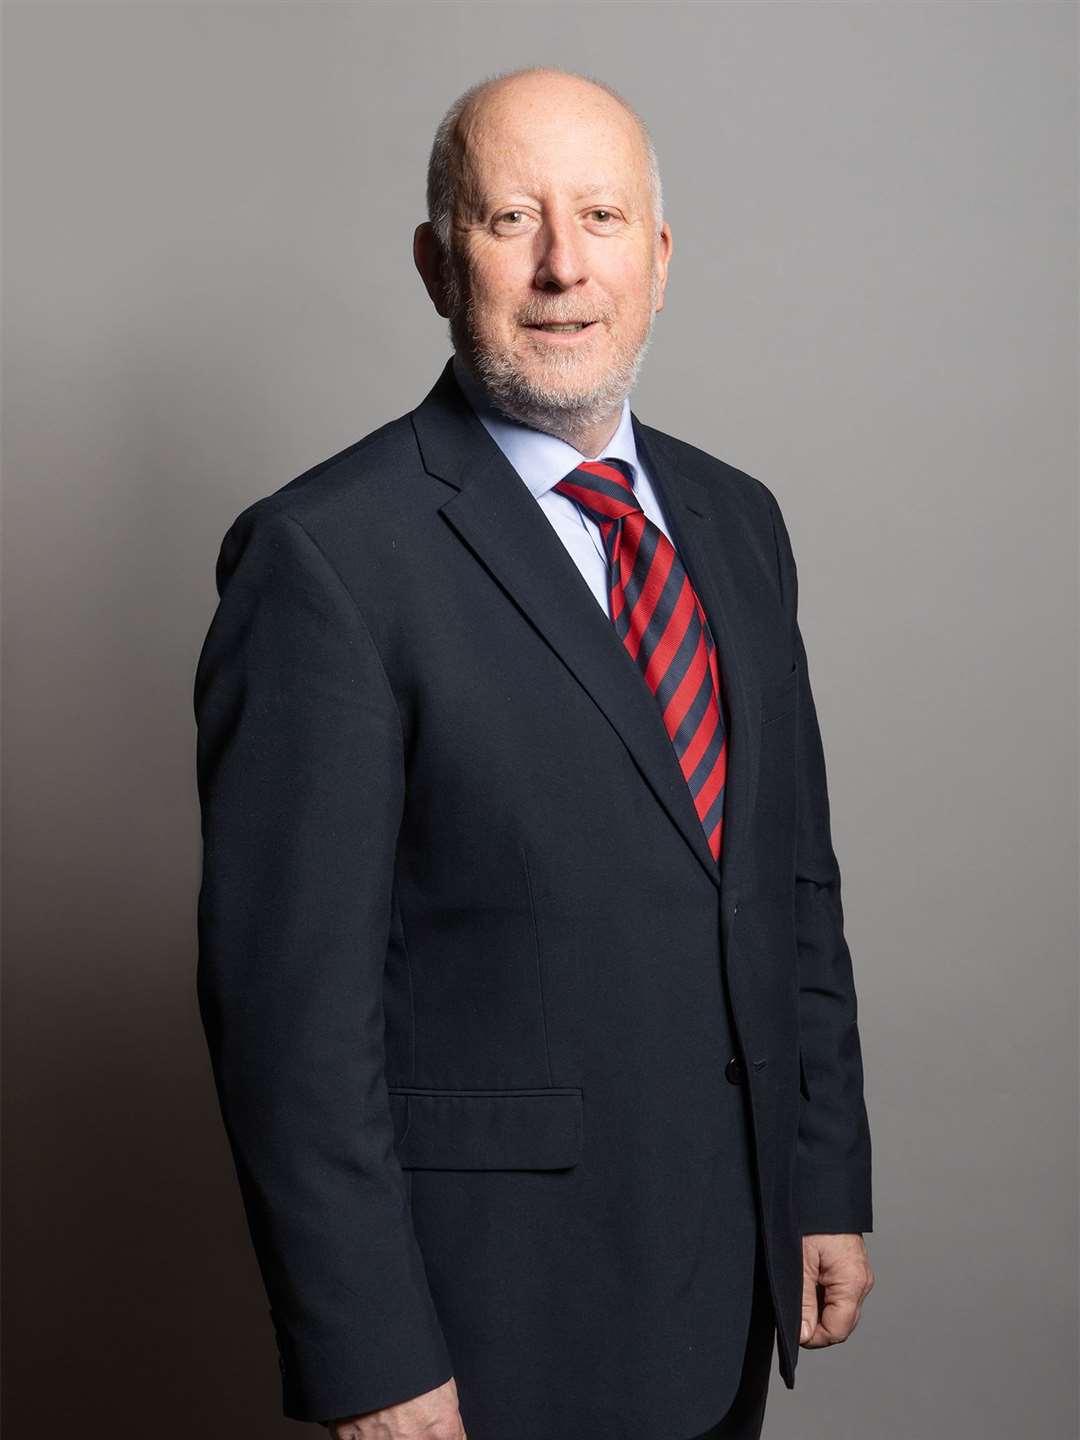 Middlesbrough MP Andy McDonald (Richard Townshend/UK Parliament/PA)